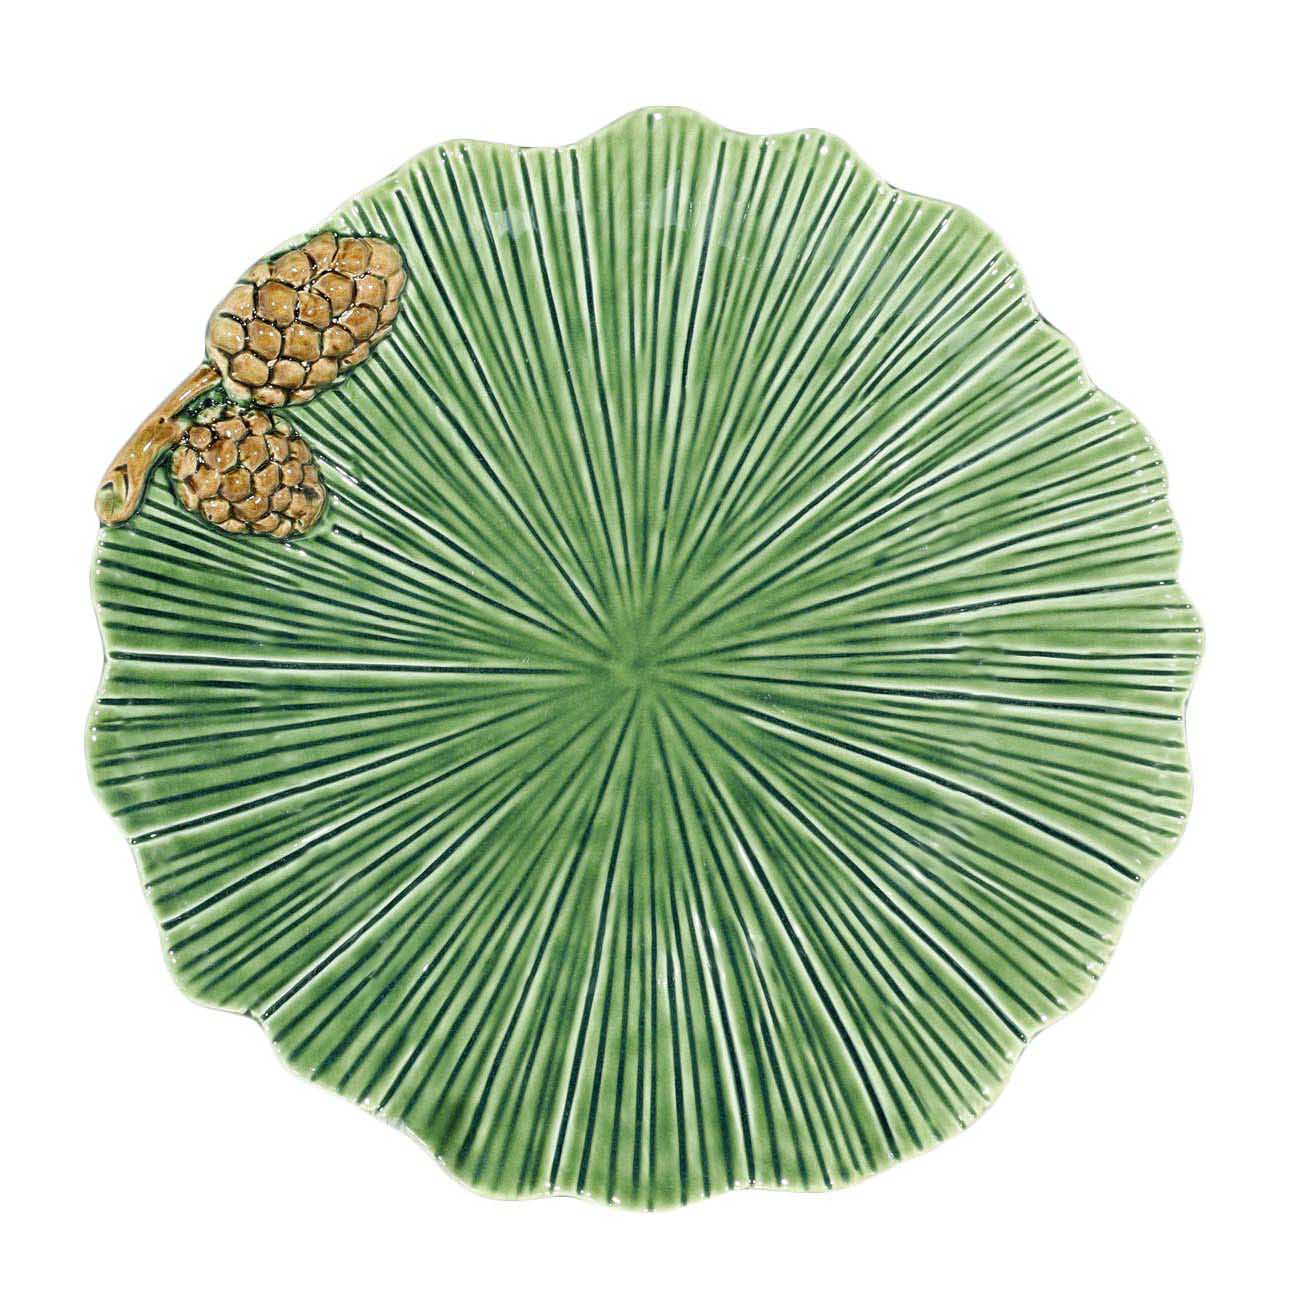 Блюдо, 21 см, керамика, круглое, зеленое, Шишки на листе, Fir cone - фото 1